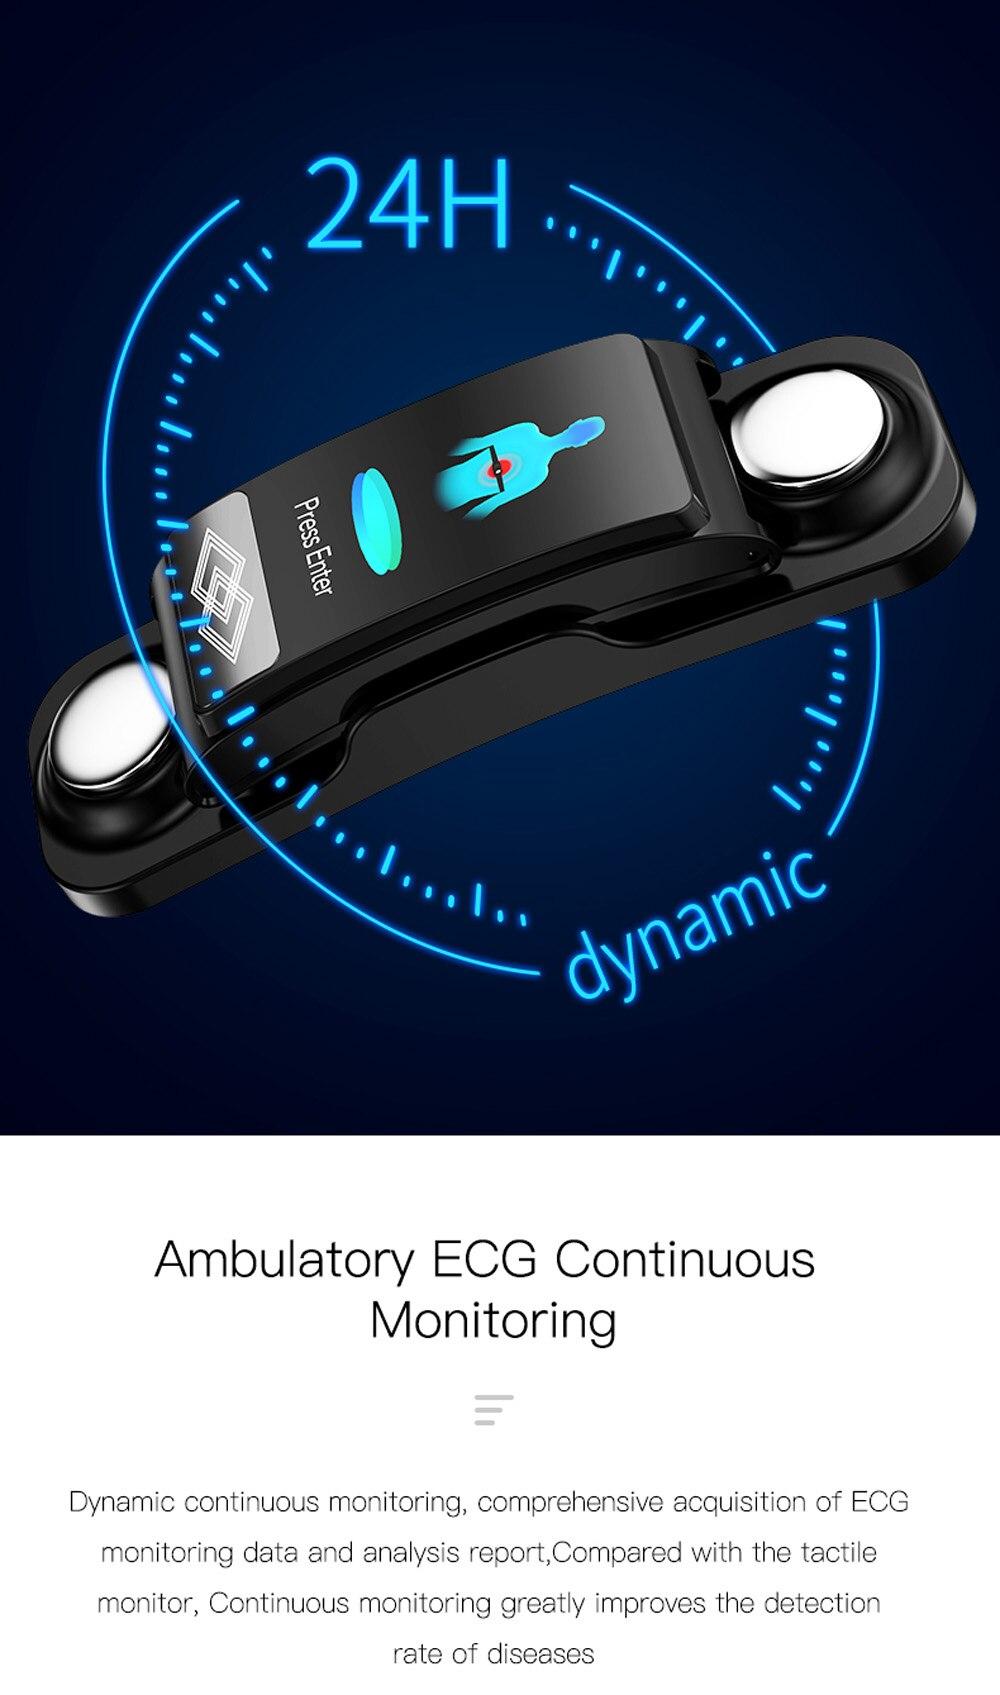 ECG PPG HRV Smart Bracelet Men Hand ECG Text Electrocardiogram Record Heart Rate Smart Band Waterproof Fitness Wristbands